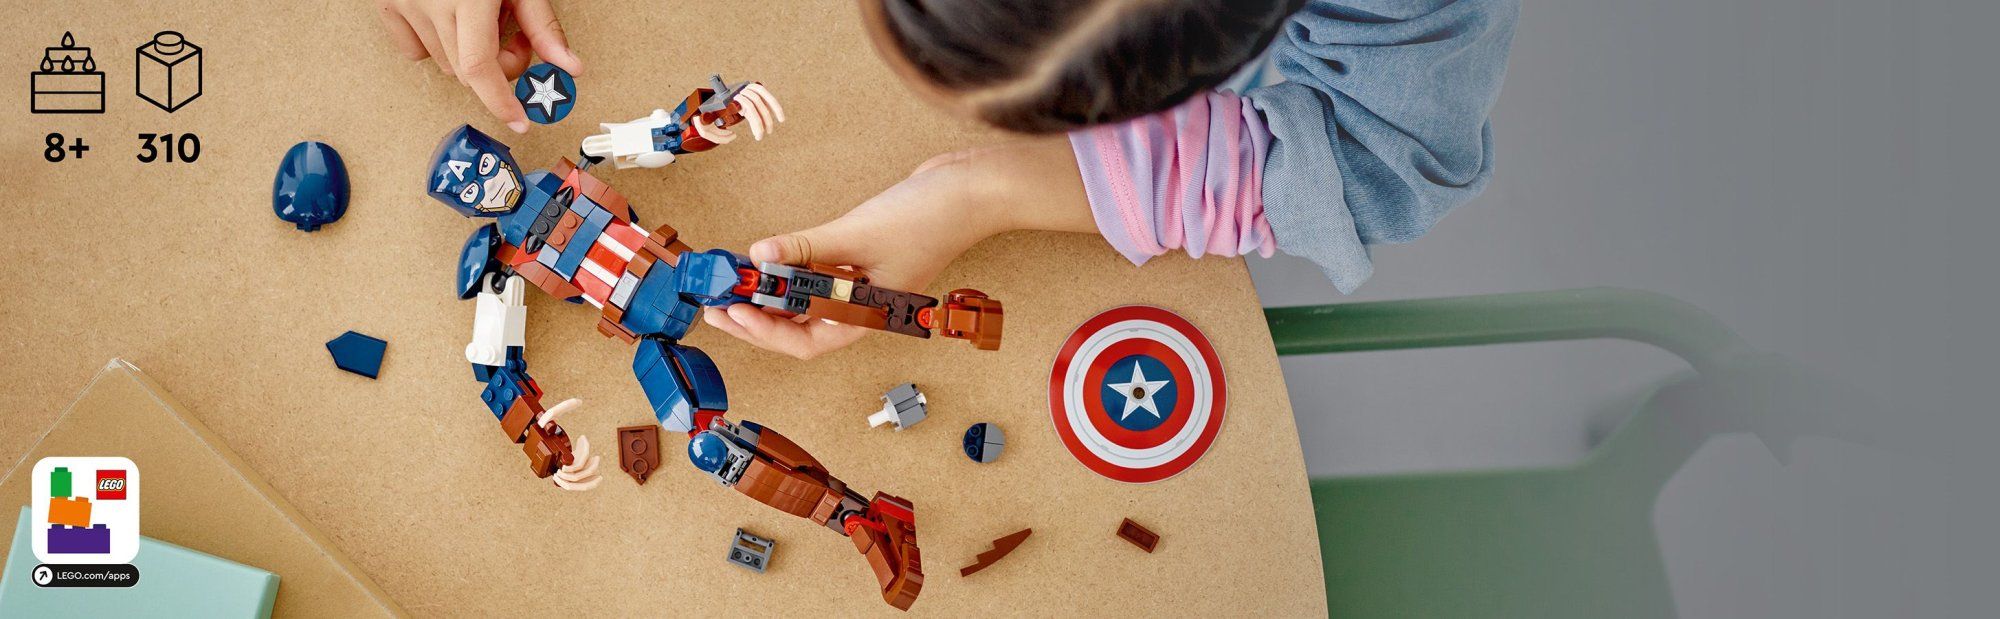 LEGO Marvel 76258 Sestavitelná figurka: Captain America